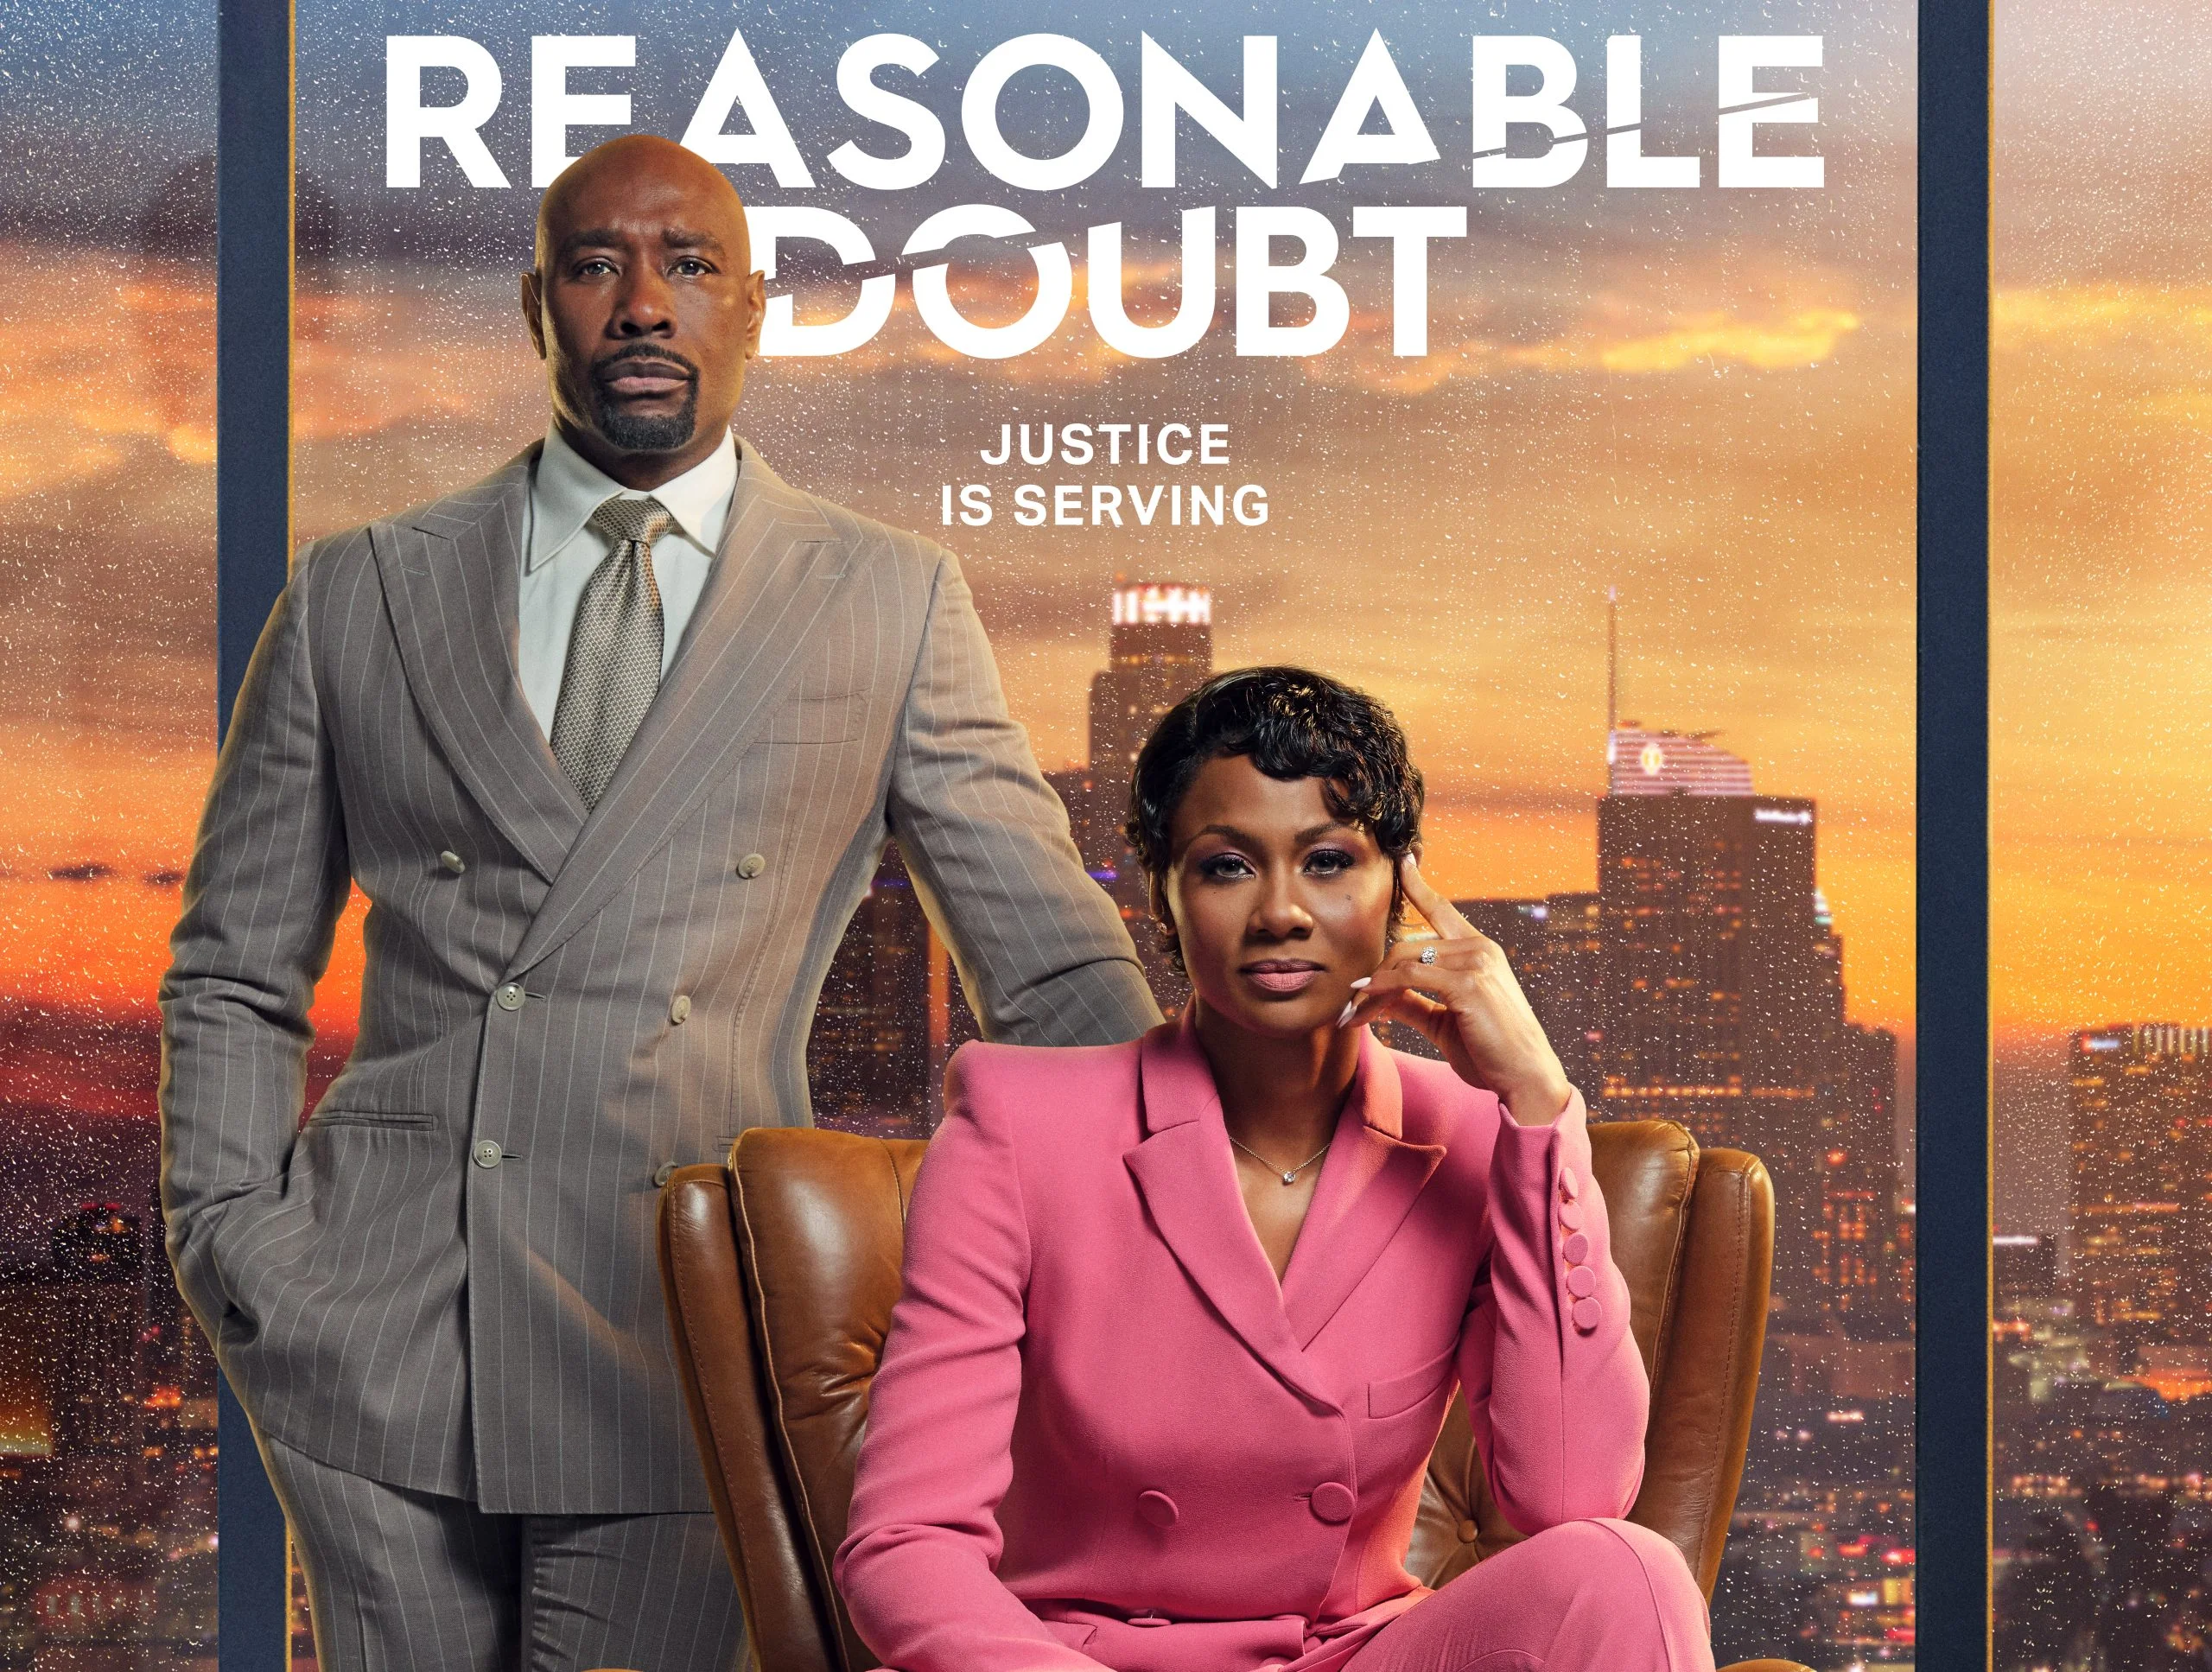 Trailer: Hulu’s Reasonable Doubt Season 2 premieres August 22nd